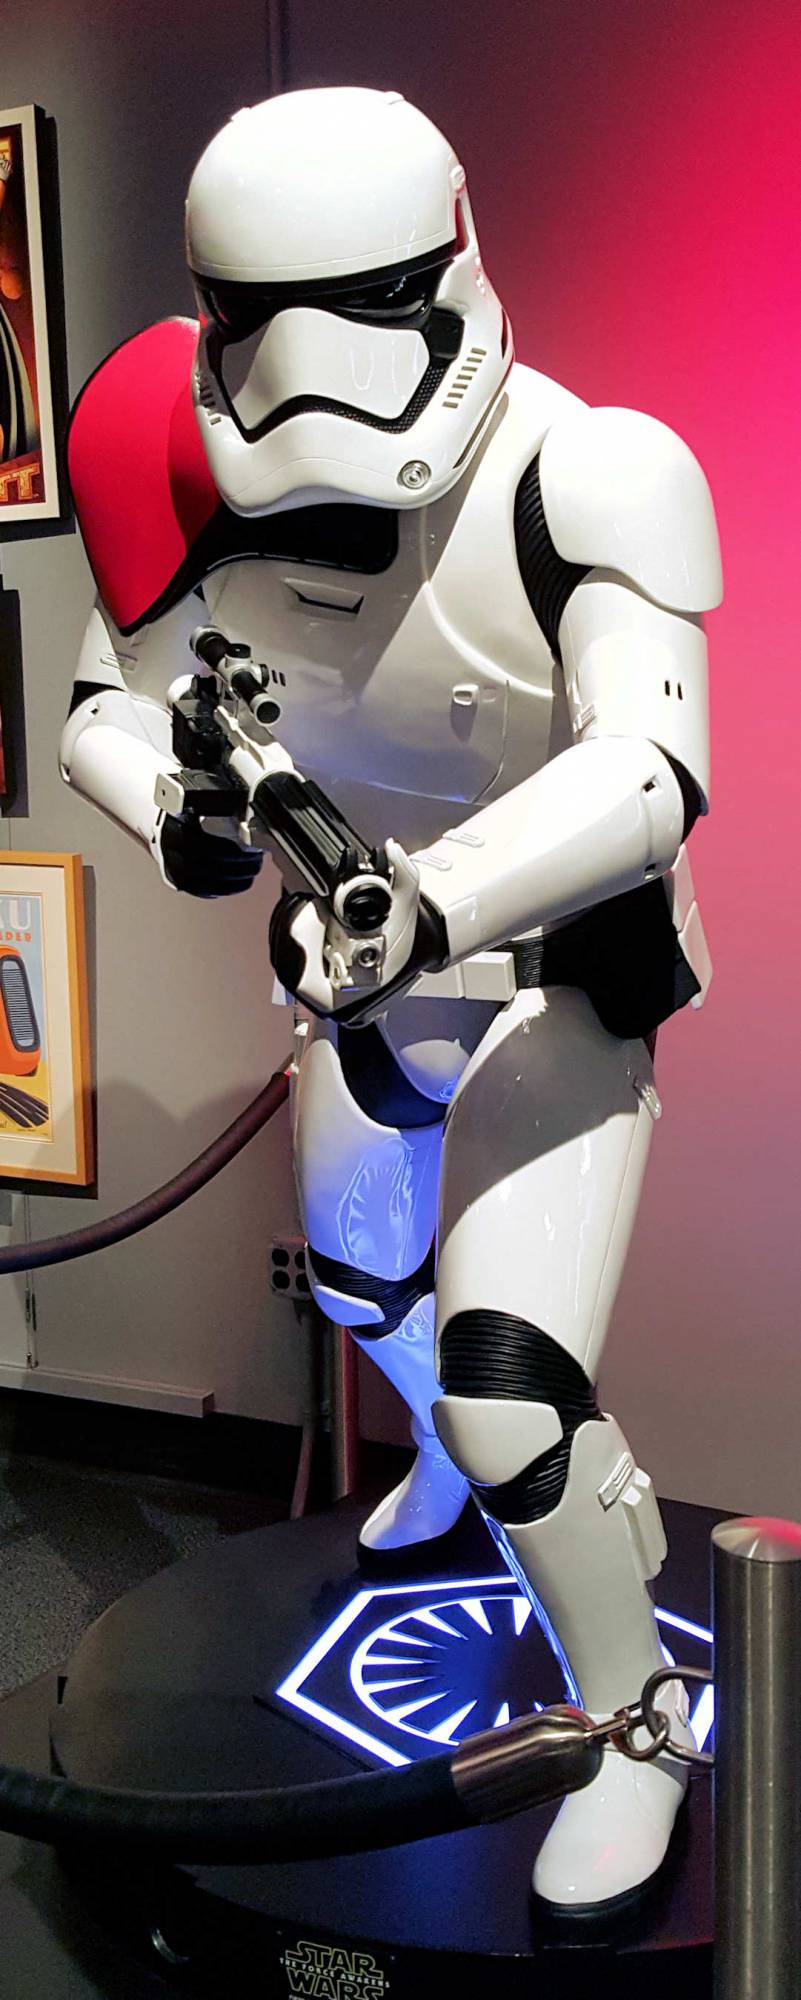 Disneyland--Tomorrowland--Star Wars Launch Bay--storm trooper statue